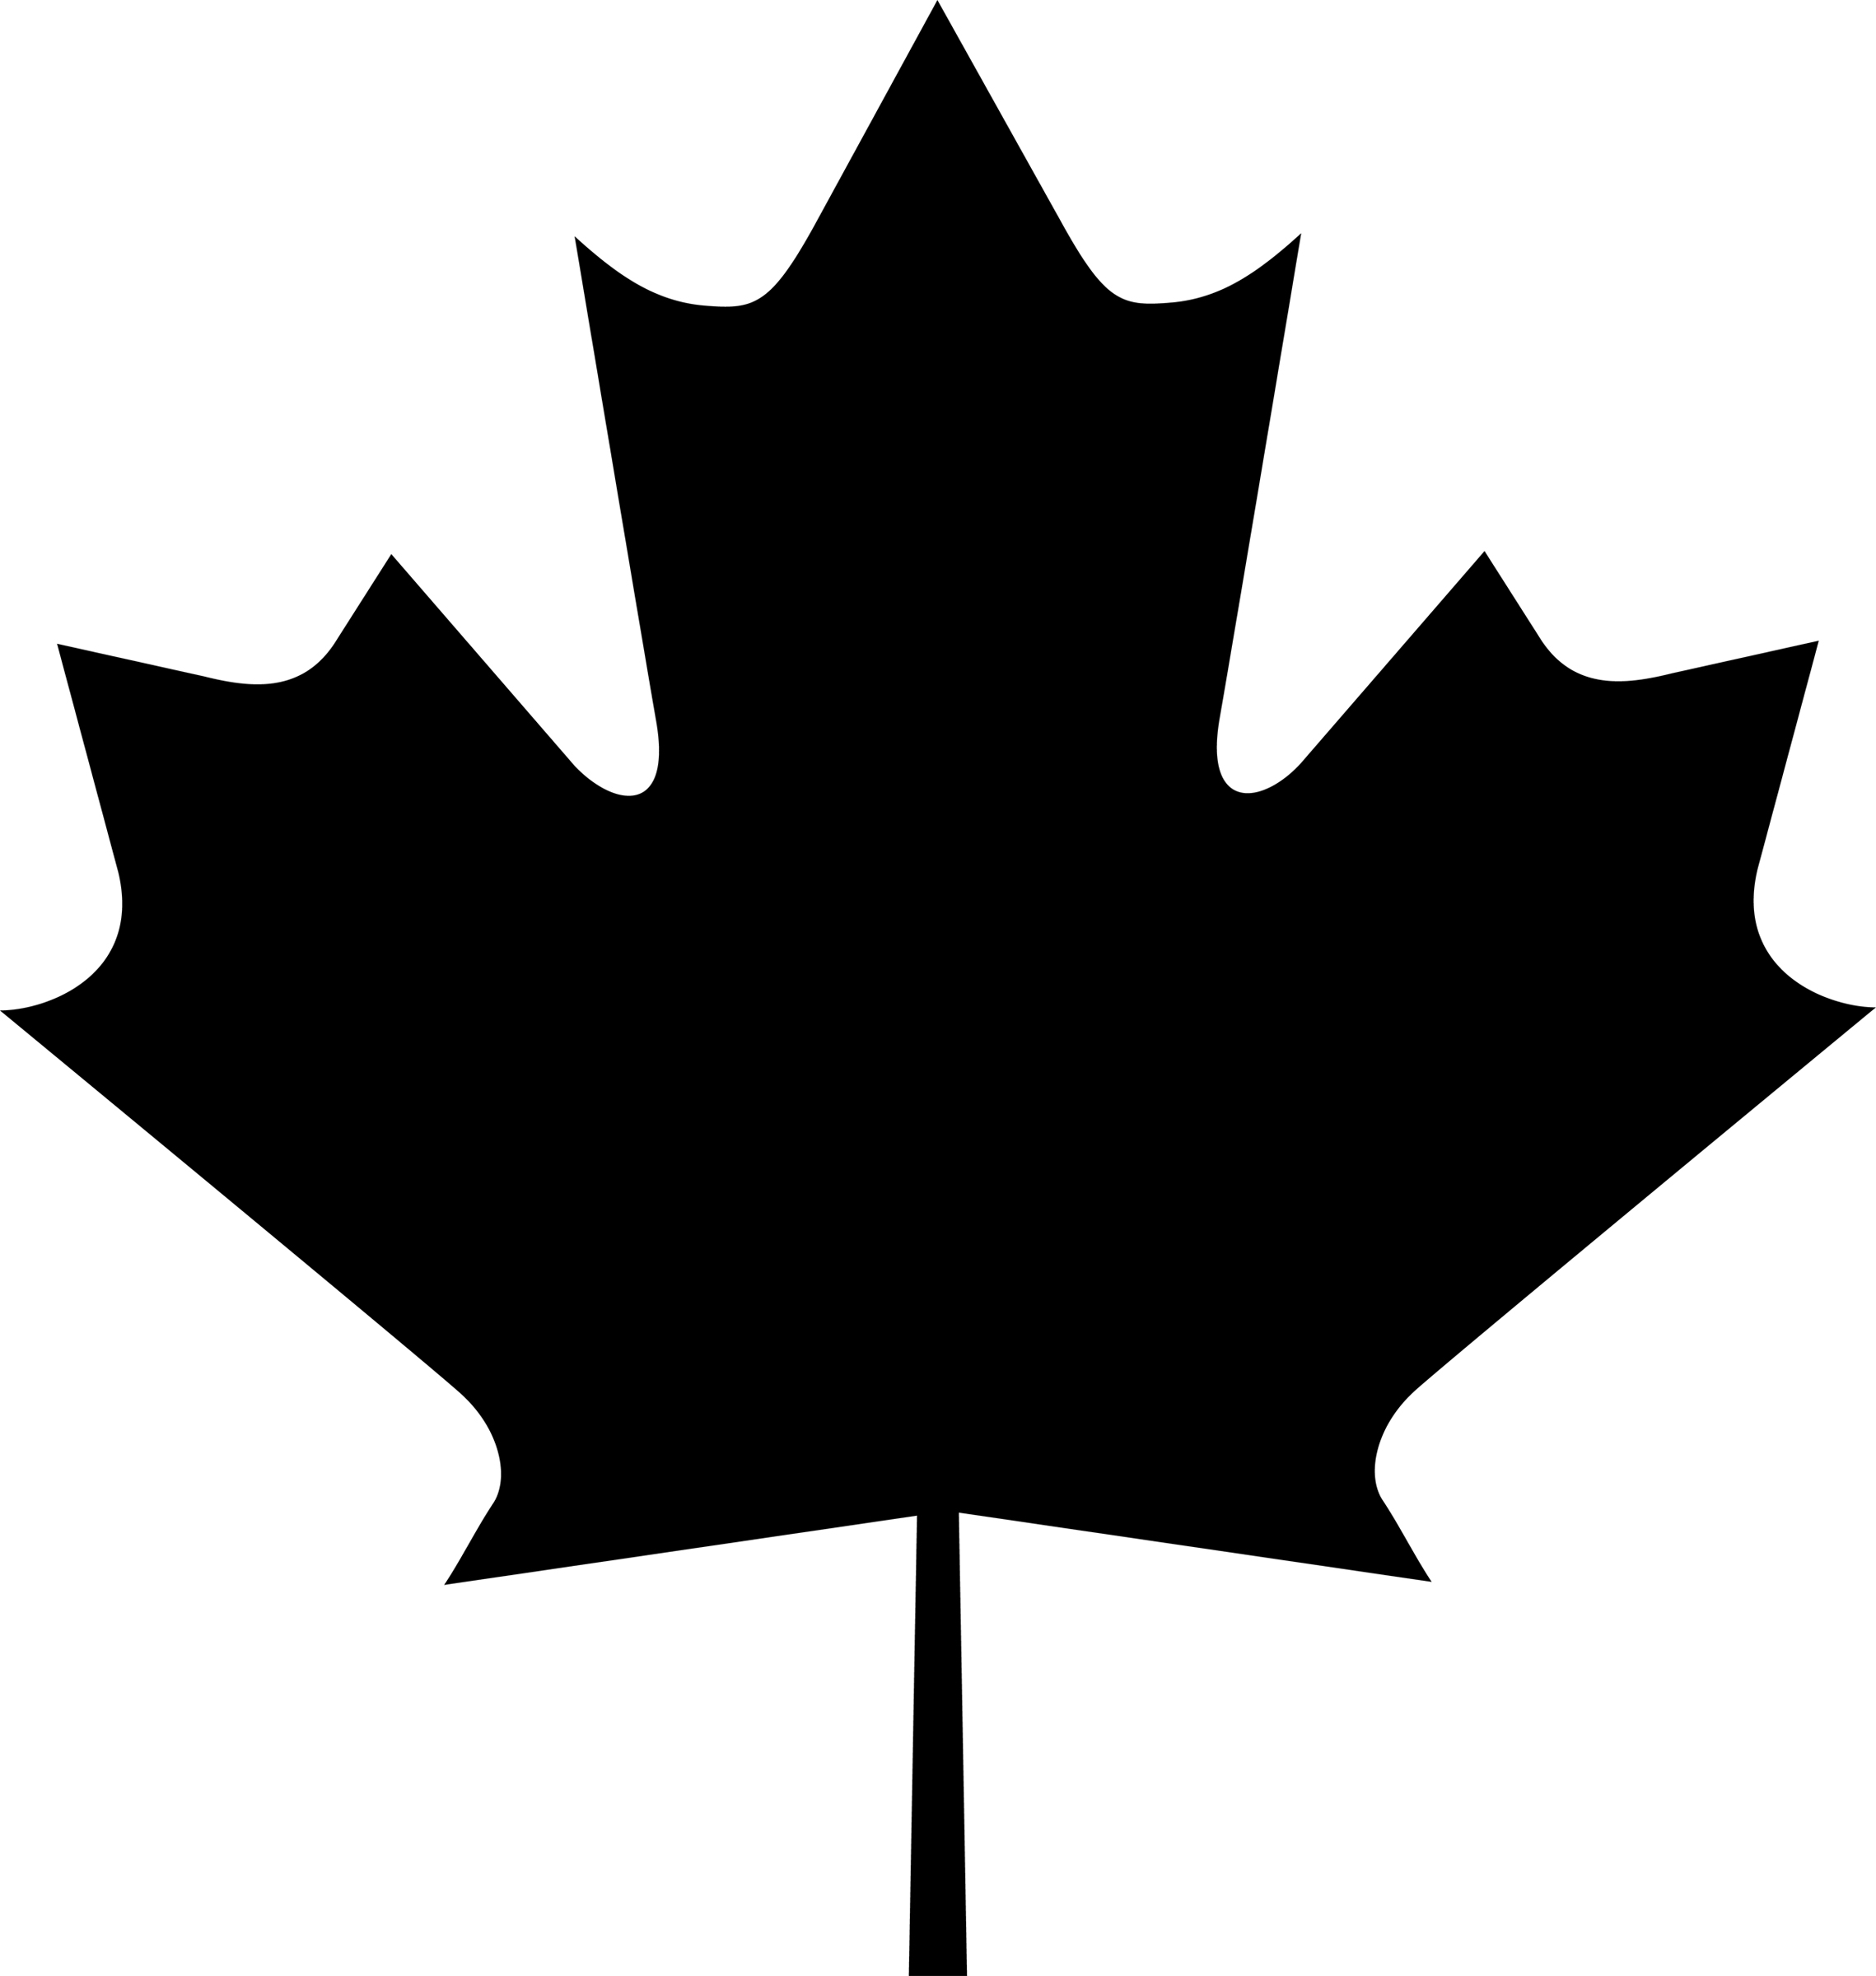 Maple Leaf Clip Art Black And White